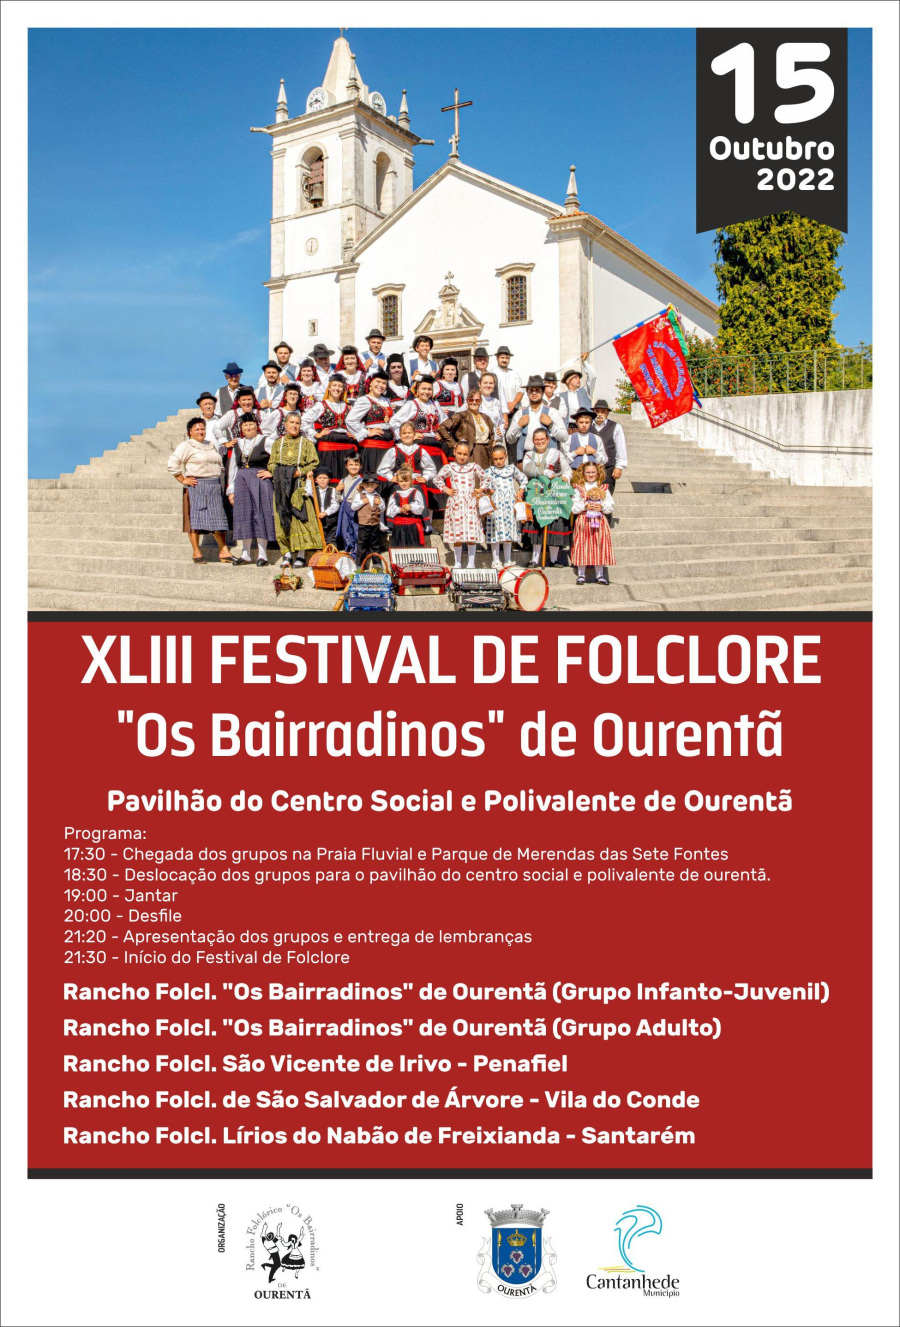 XLIII Festival de Folclore